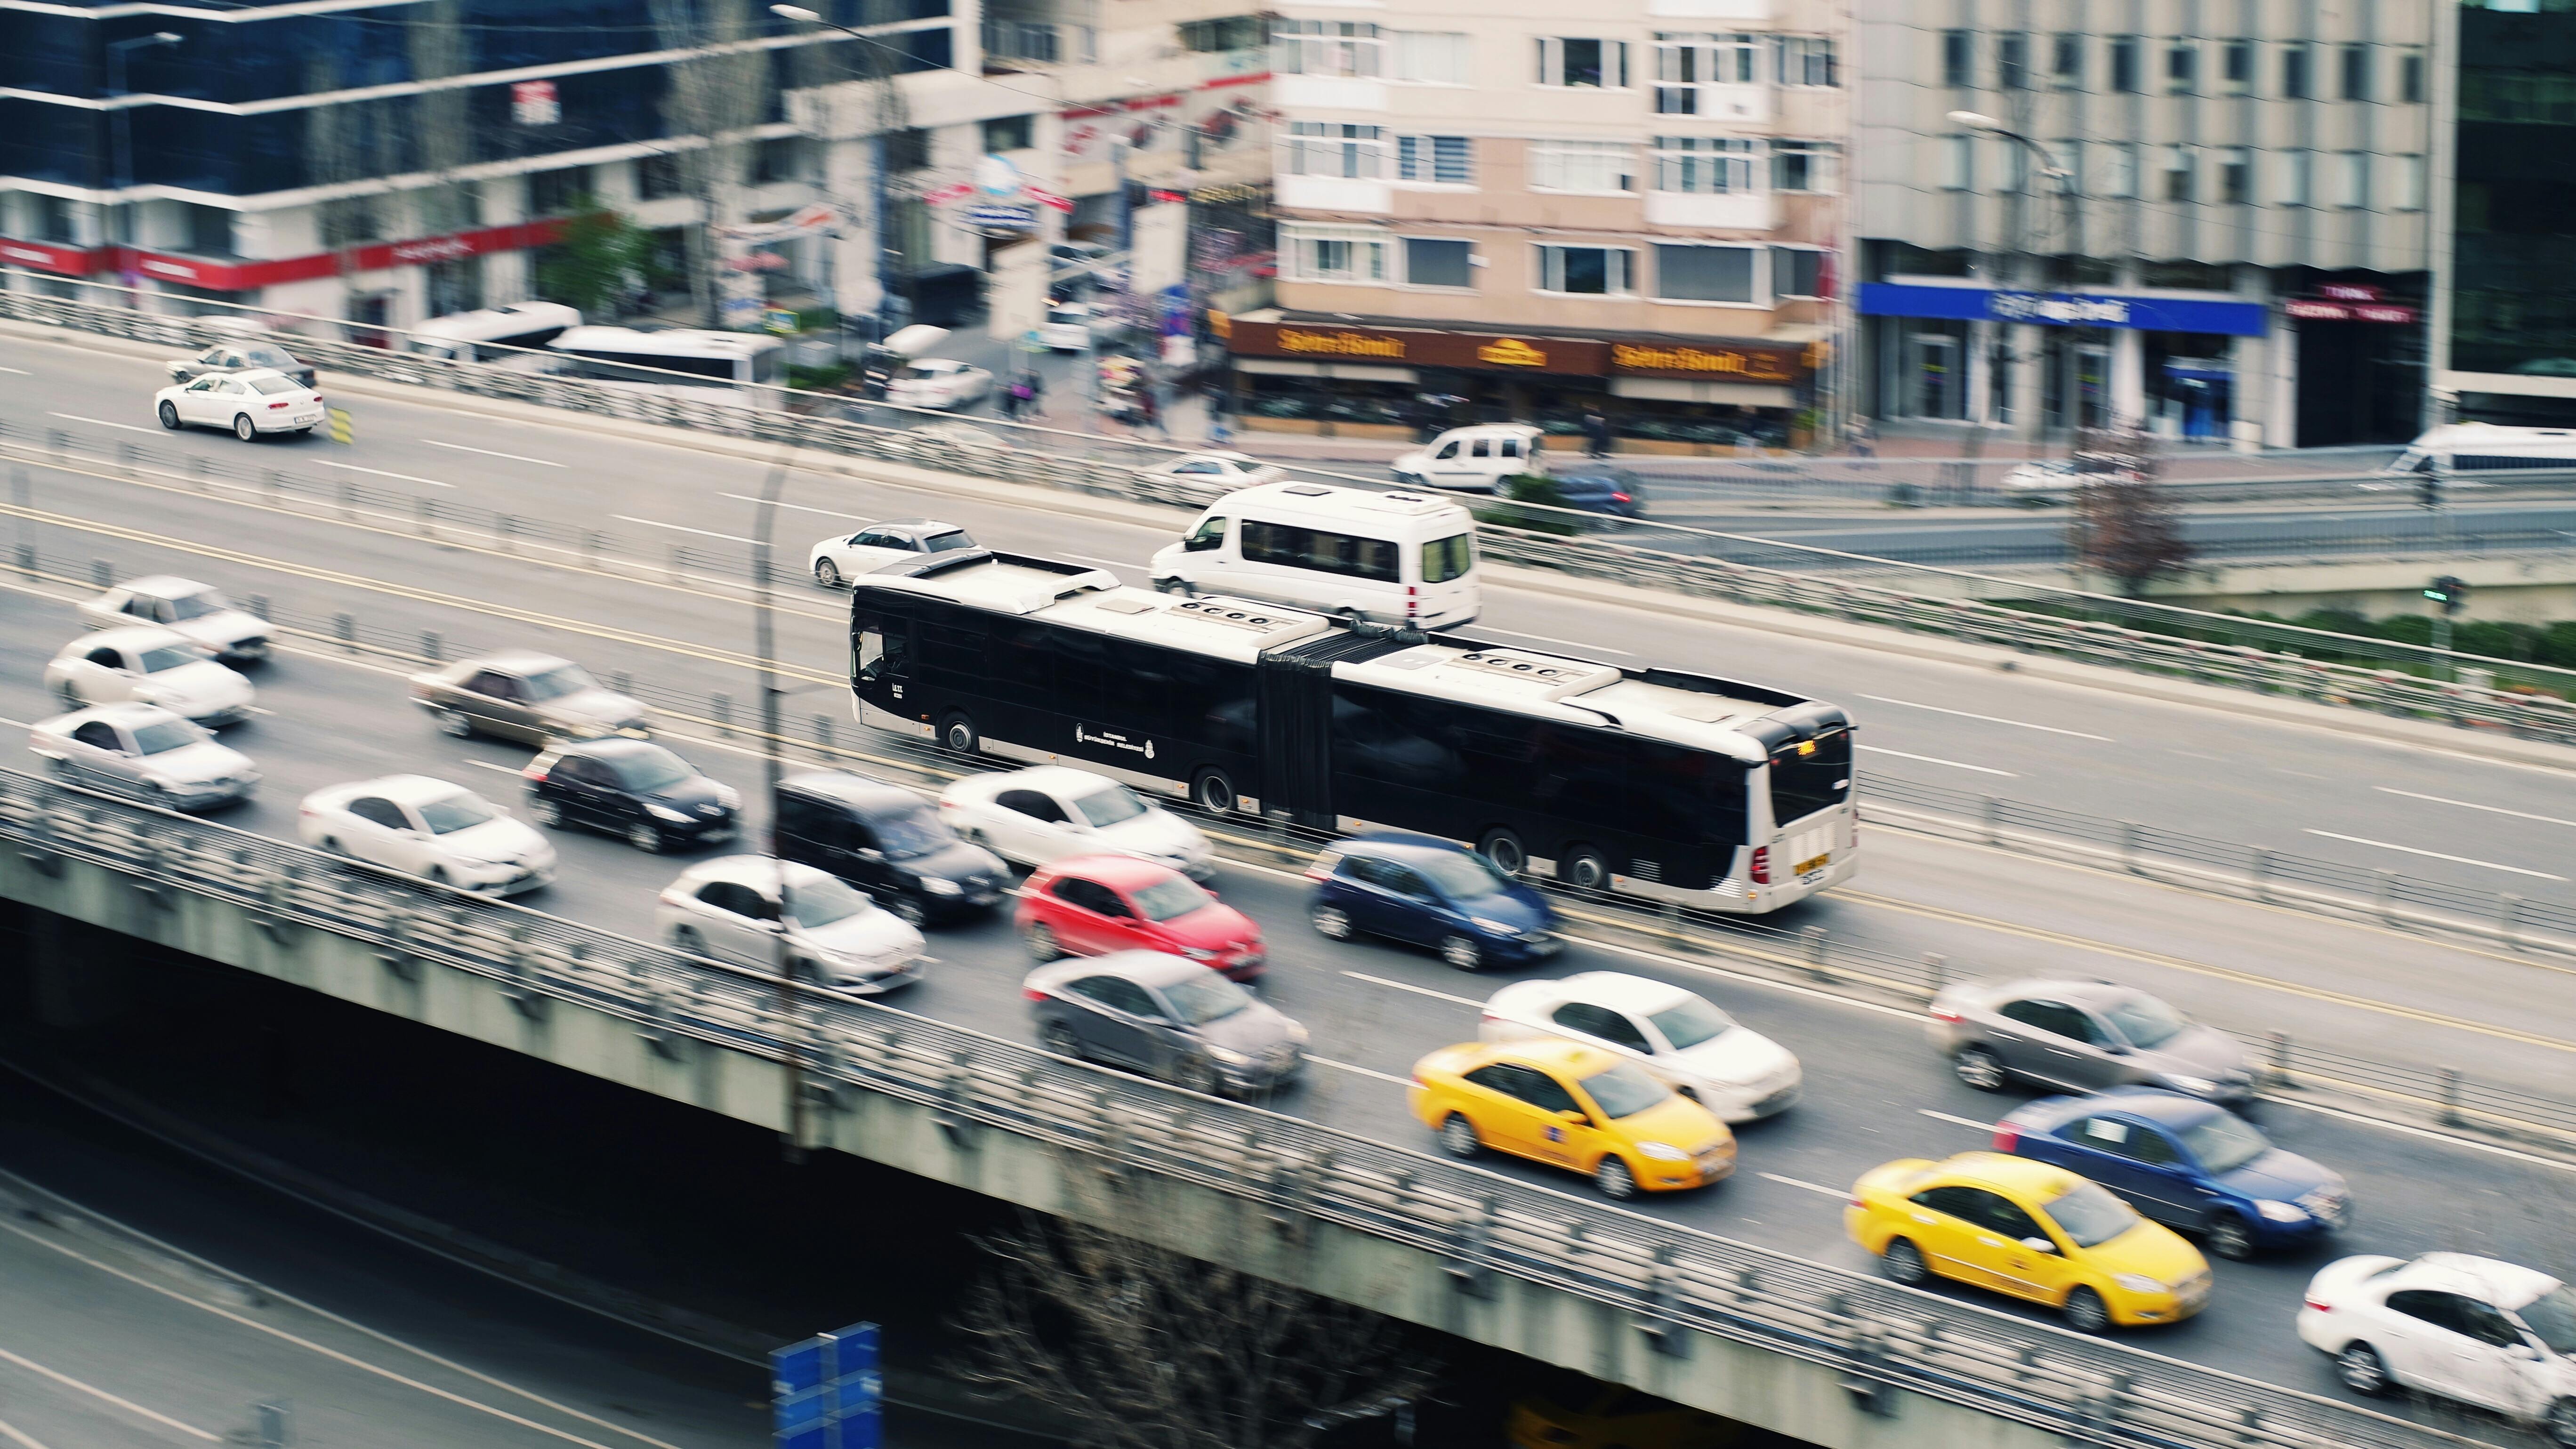 Navigating Public Transport: Daily Tips for the Urban Traveler